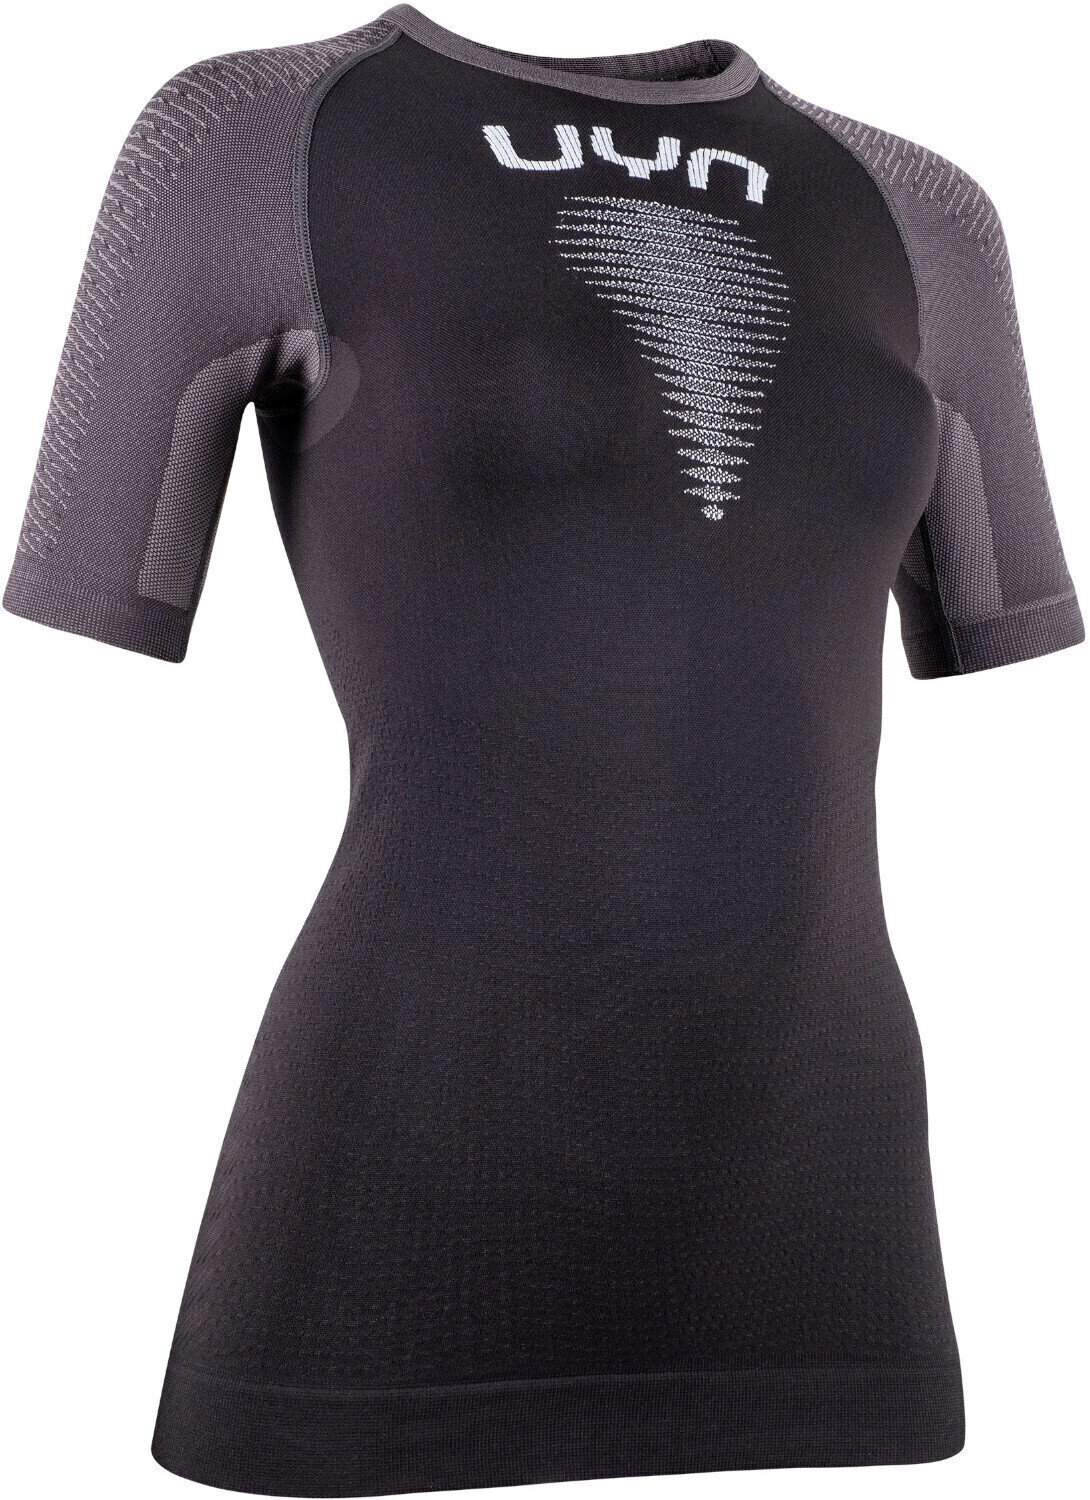 Běžecké tričko s krátkým rukávem
 UYN Marathon Ow Shirt Black/Charcoal/White L/XL Běžecké tričko s krátkým rukávem